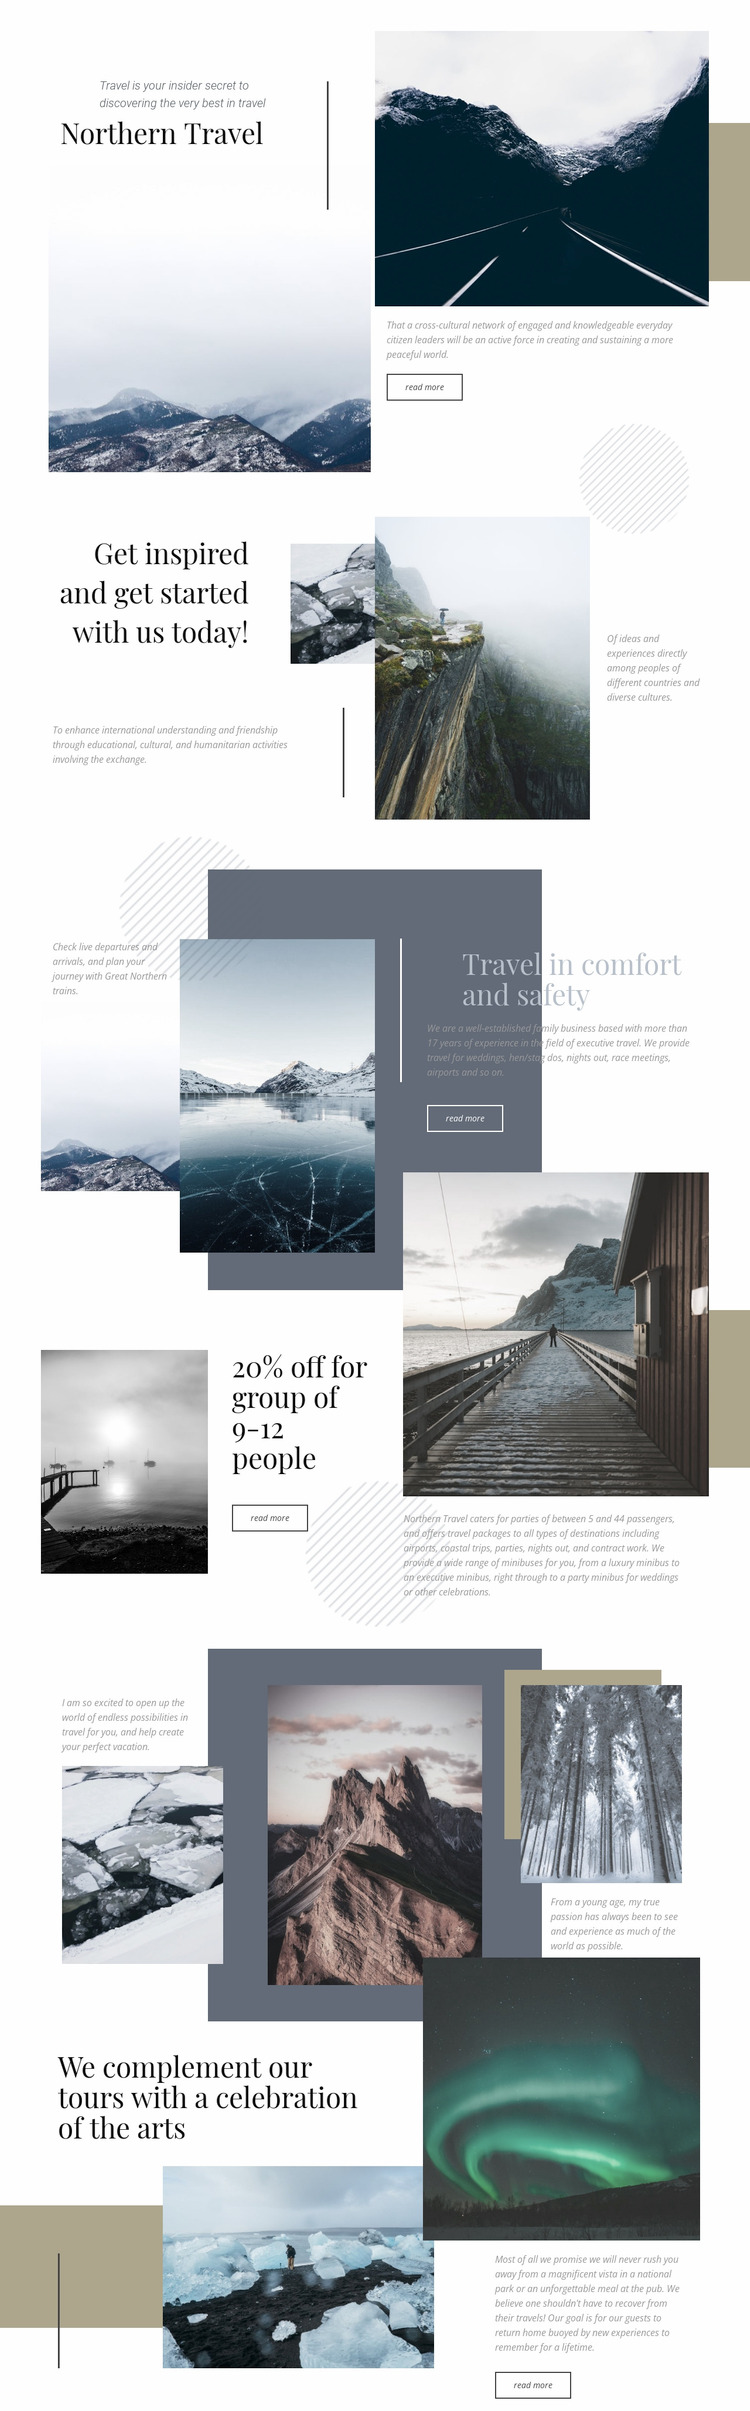 Northern Travel WordPress Website Builder